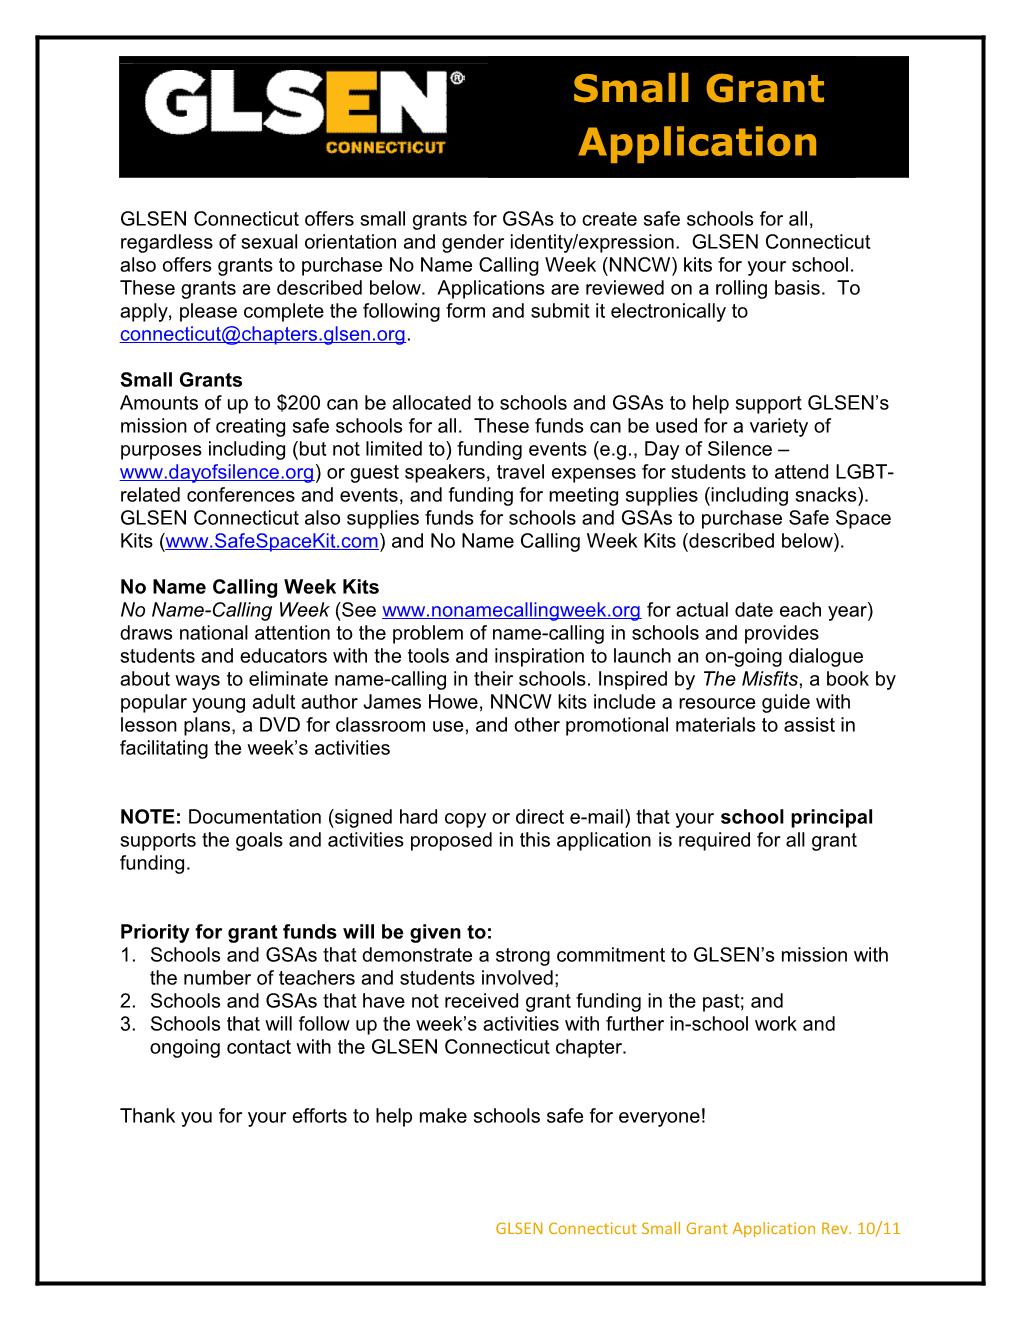 GLSEN Connecticut Small Grant Application